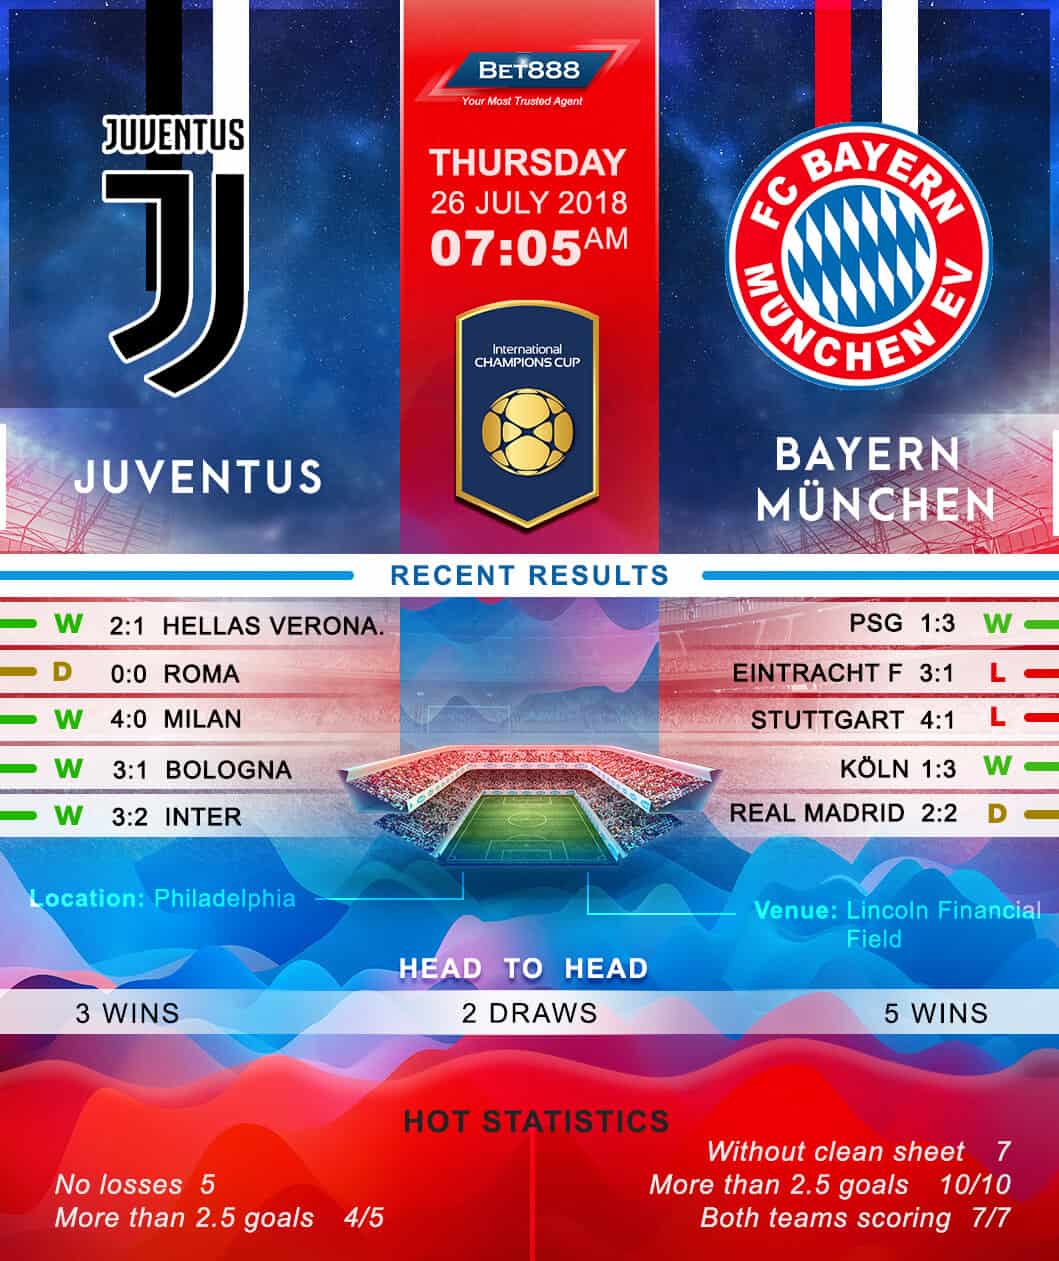 Juventus vs Bayern Munich 26/07/18